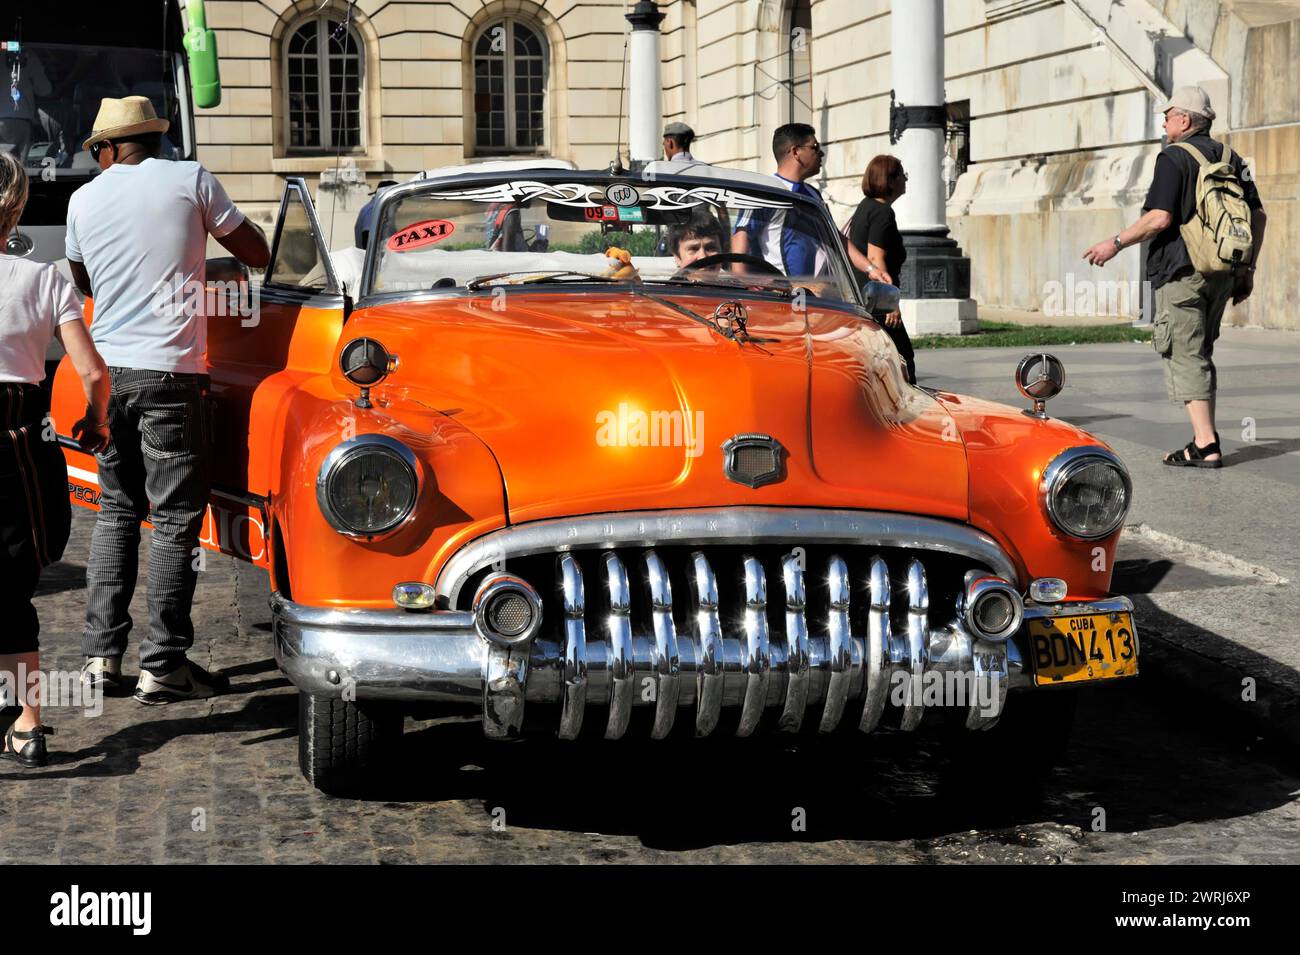 Orange-coloured vintage taxi stops on a lively city street, Havana, Cuba, Central America Stock Photo